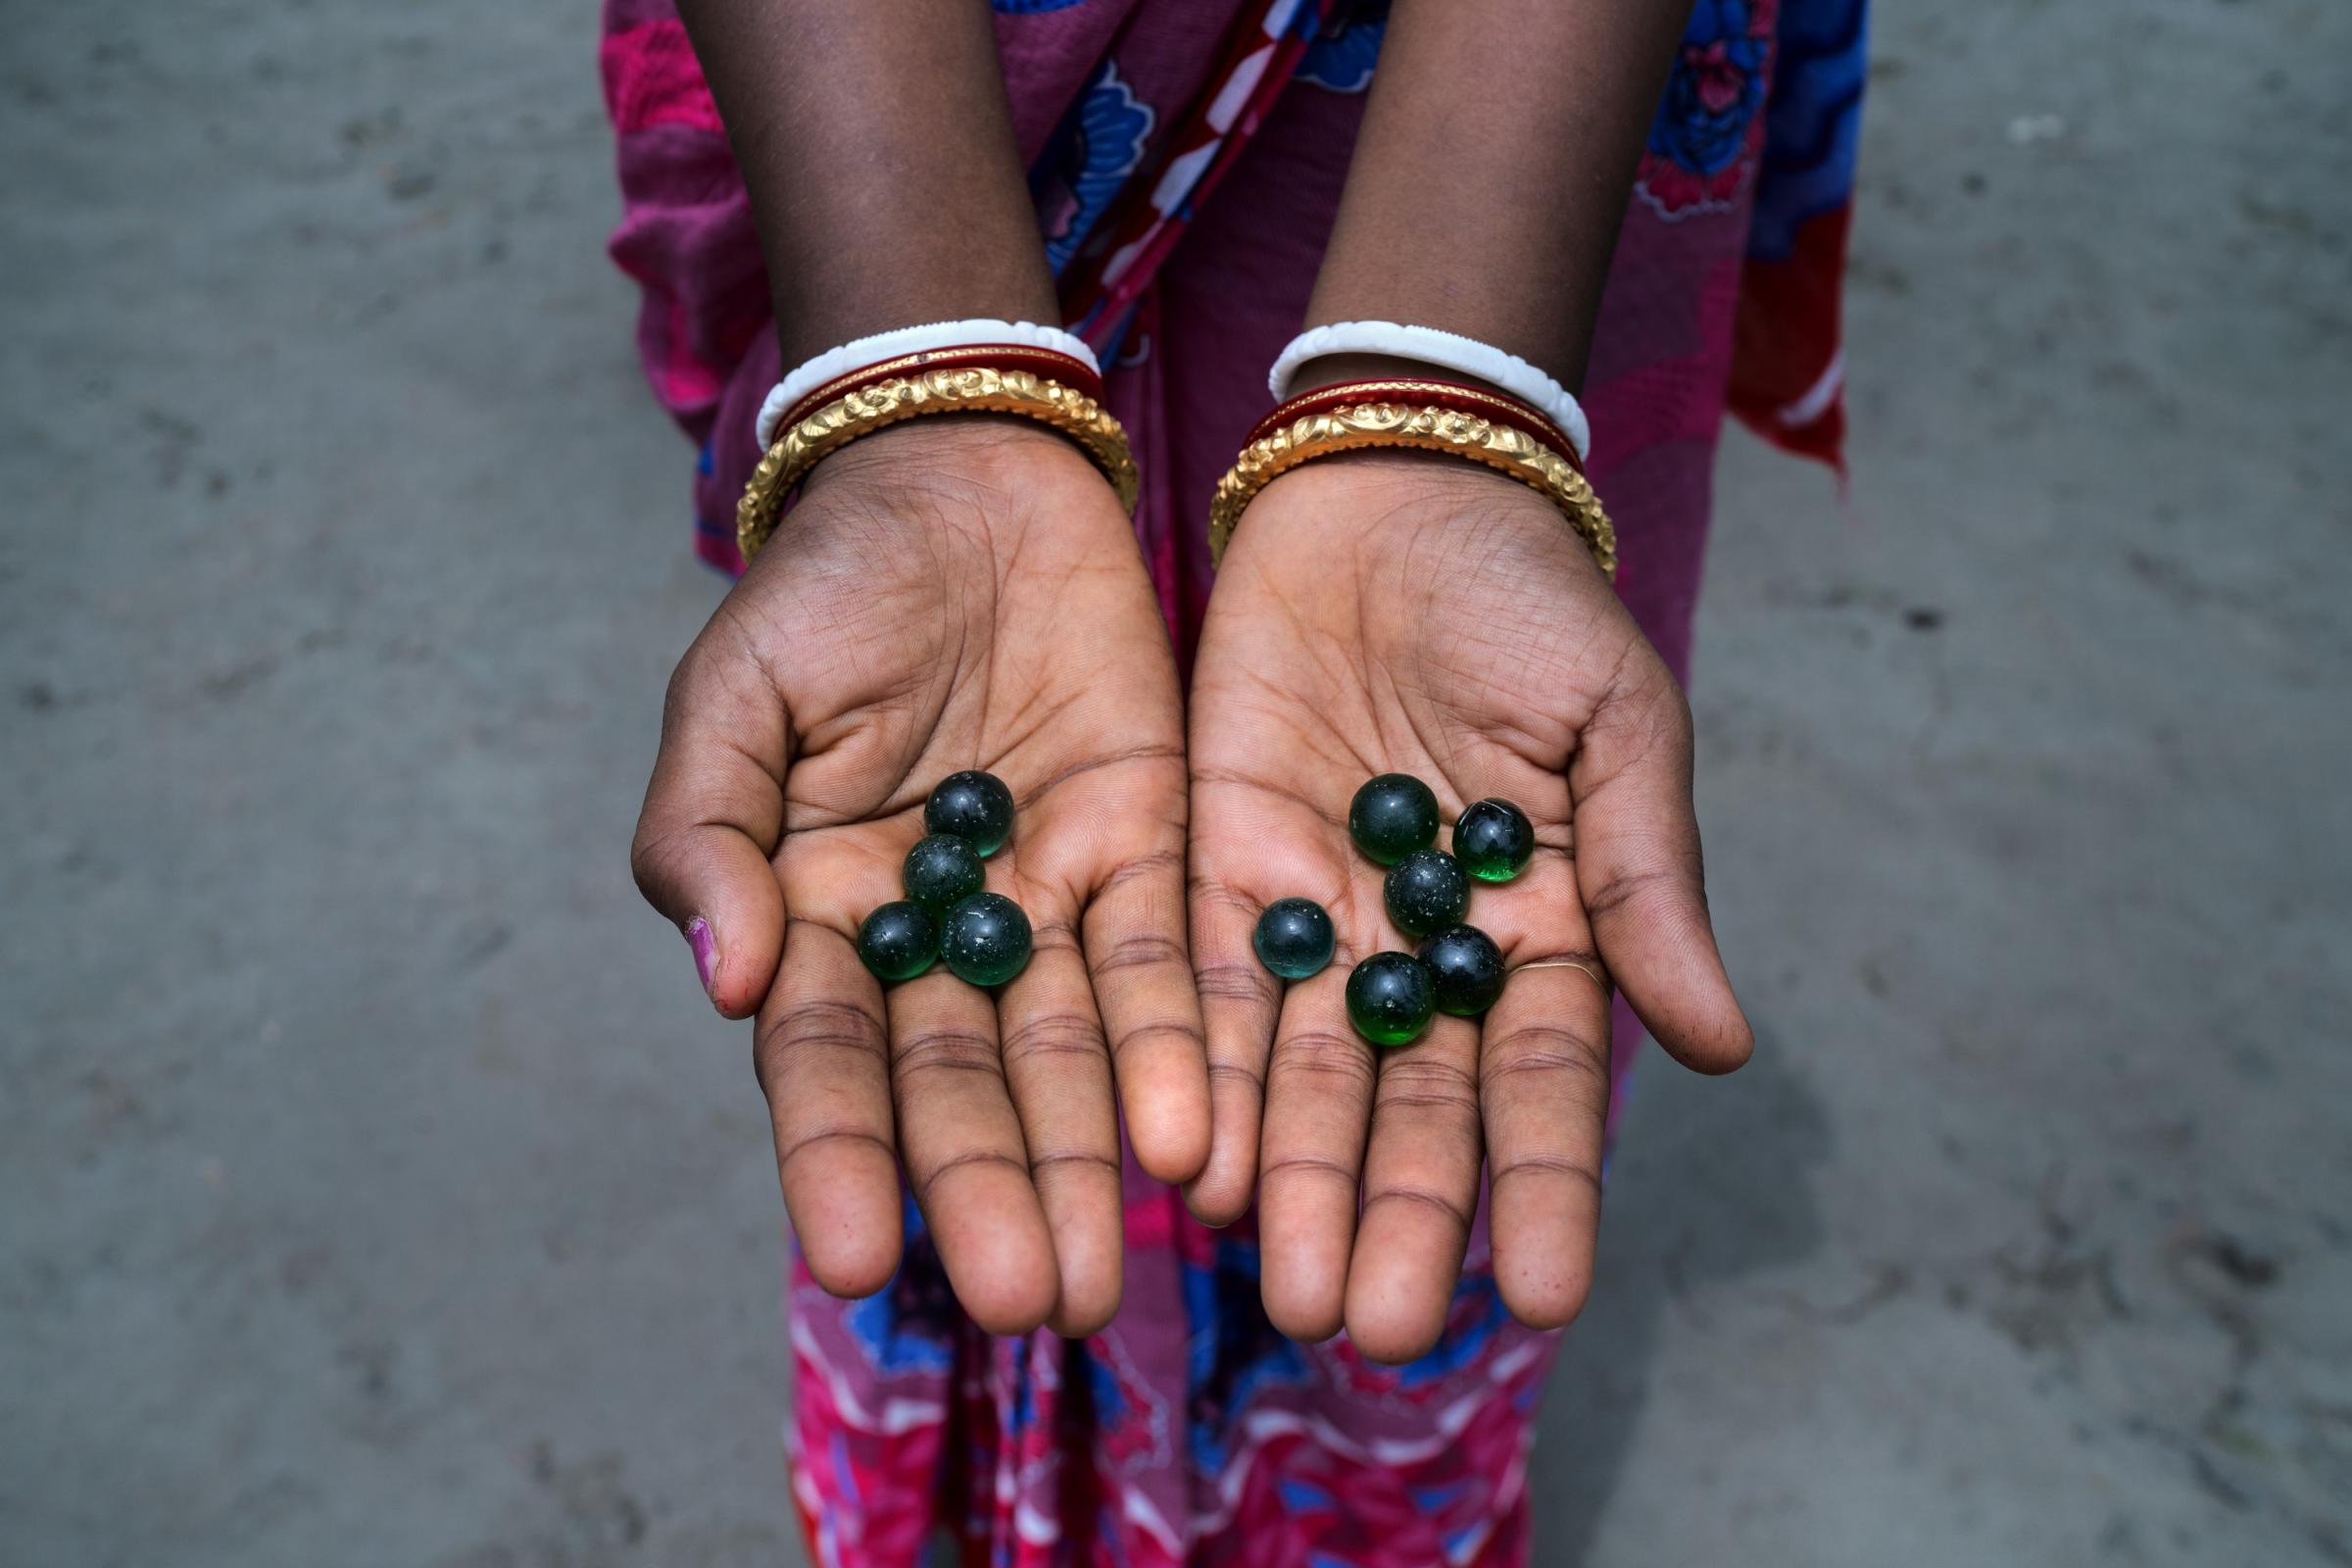 Child marriage in Bangladesh - "Sometimes I think I am a child." Gain said....